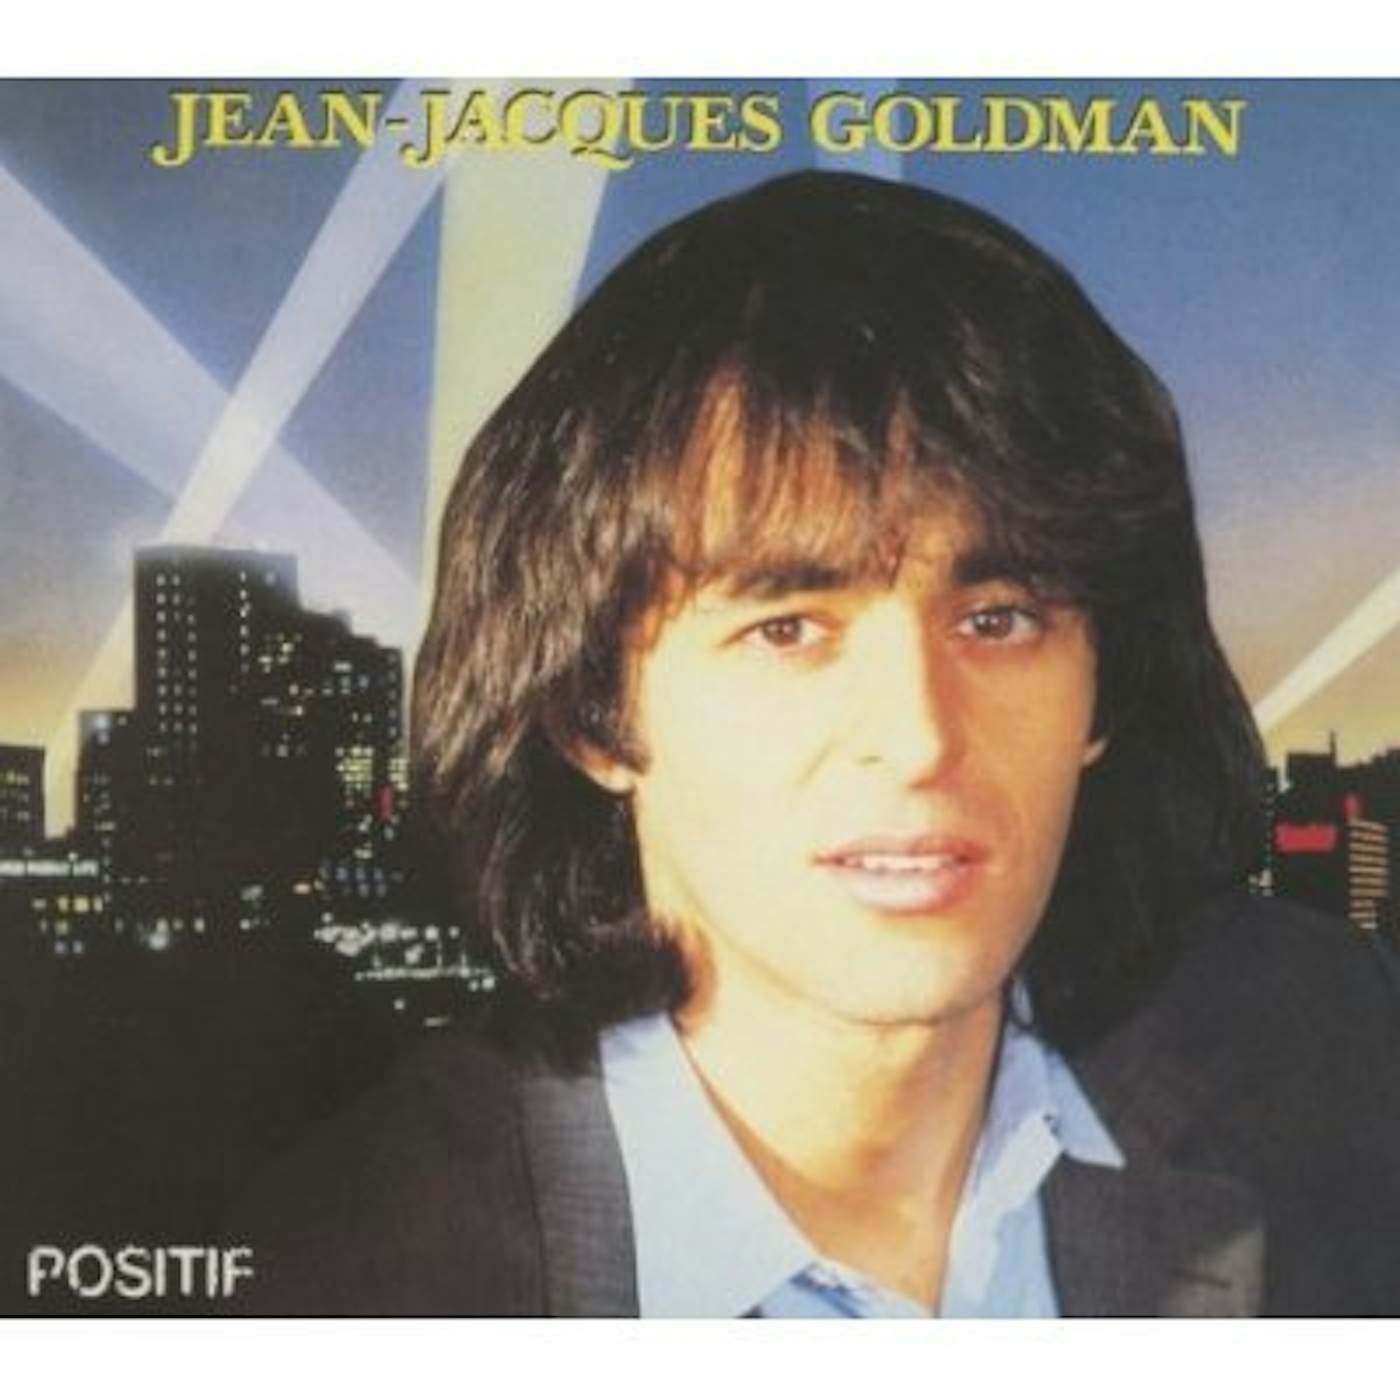 Jean-Jacques Goldman POSITIF CD